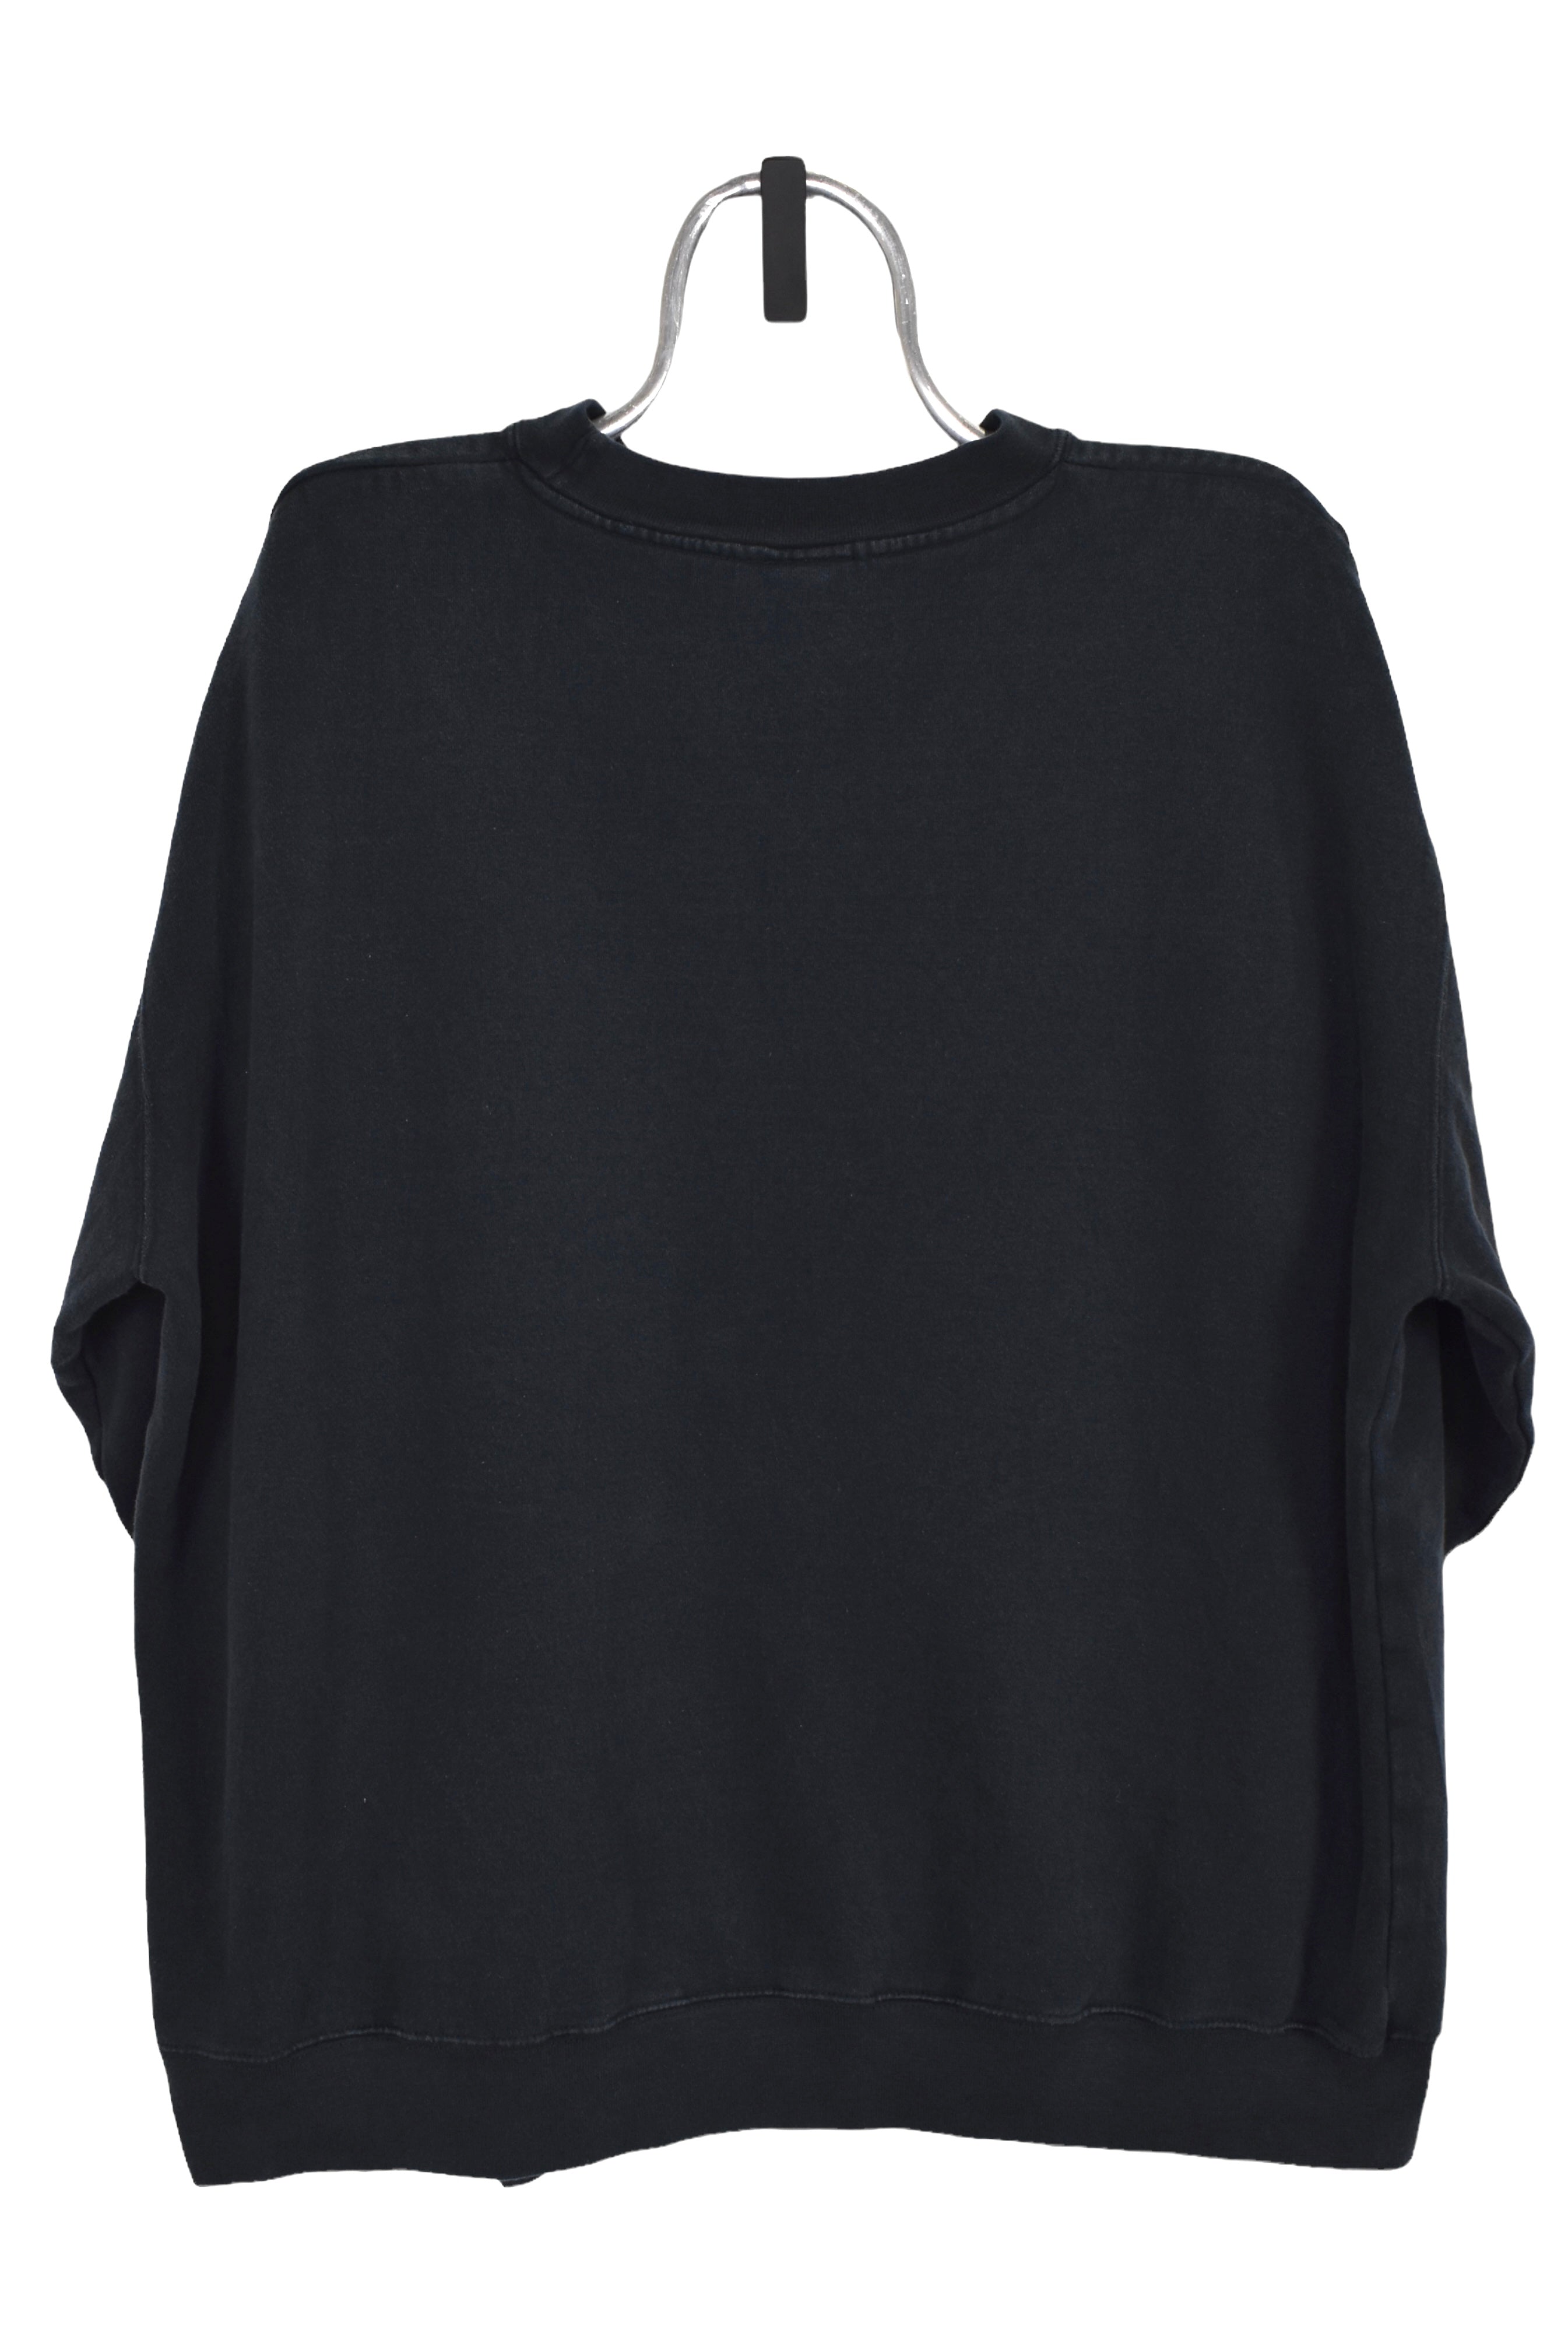 Vintage Reebok sweatshirt (2XL), black embroidered crewneck